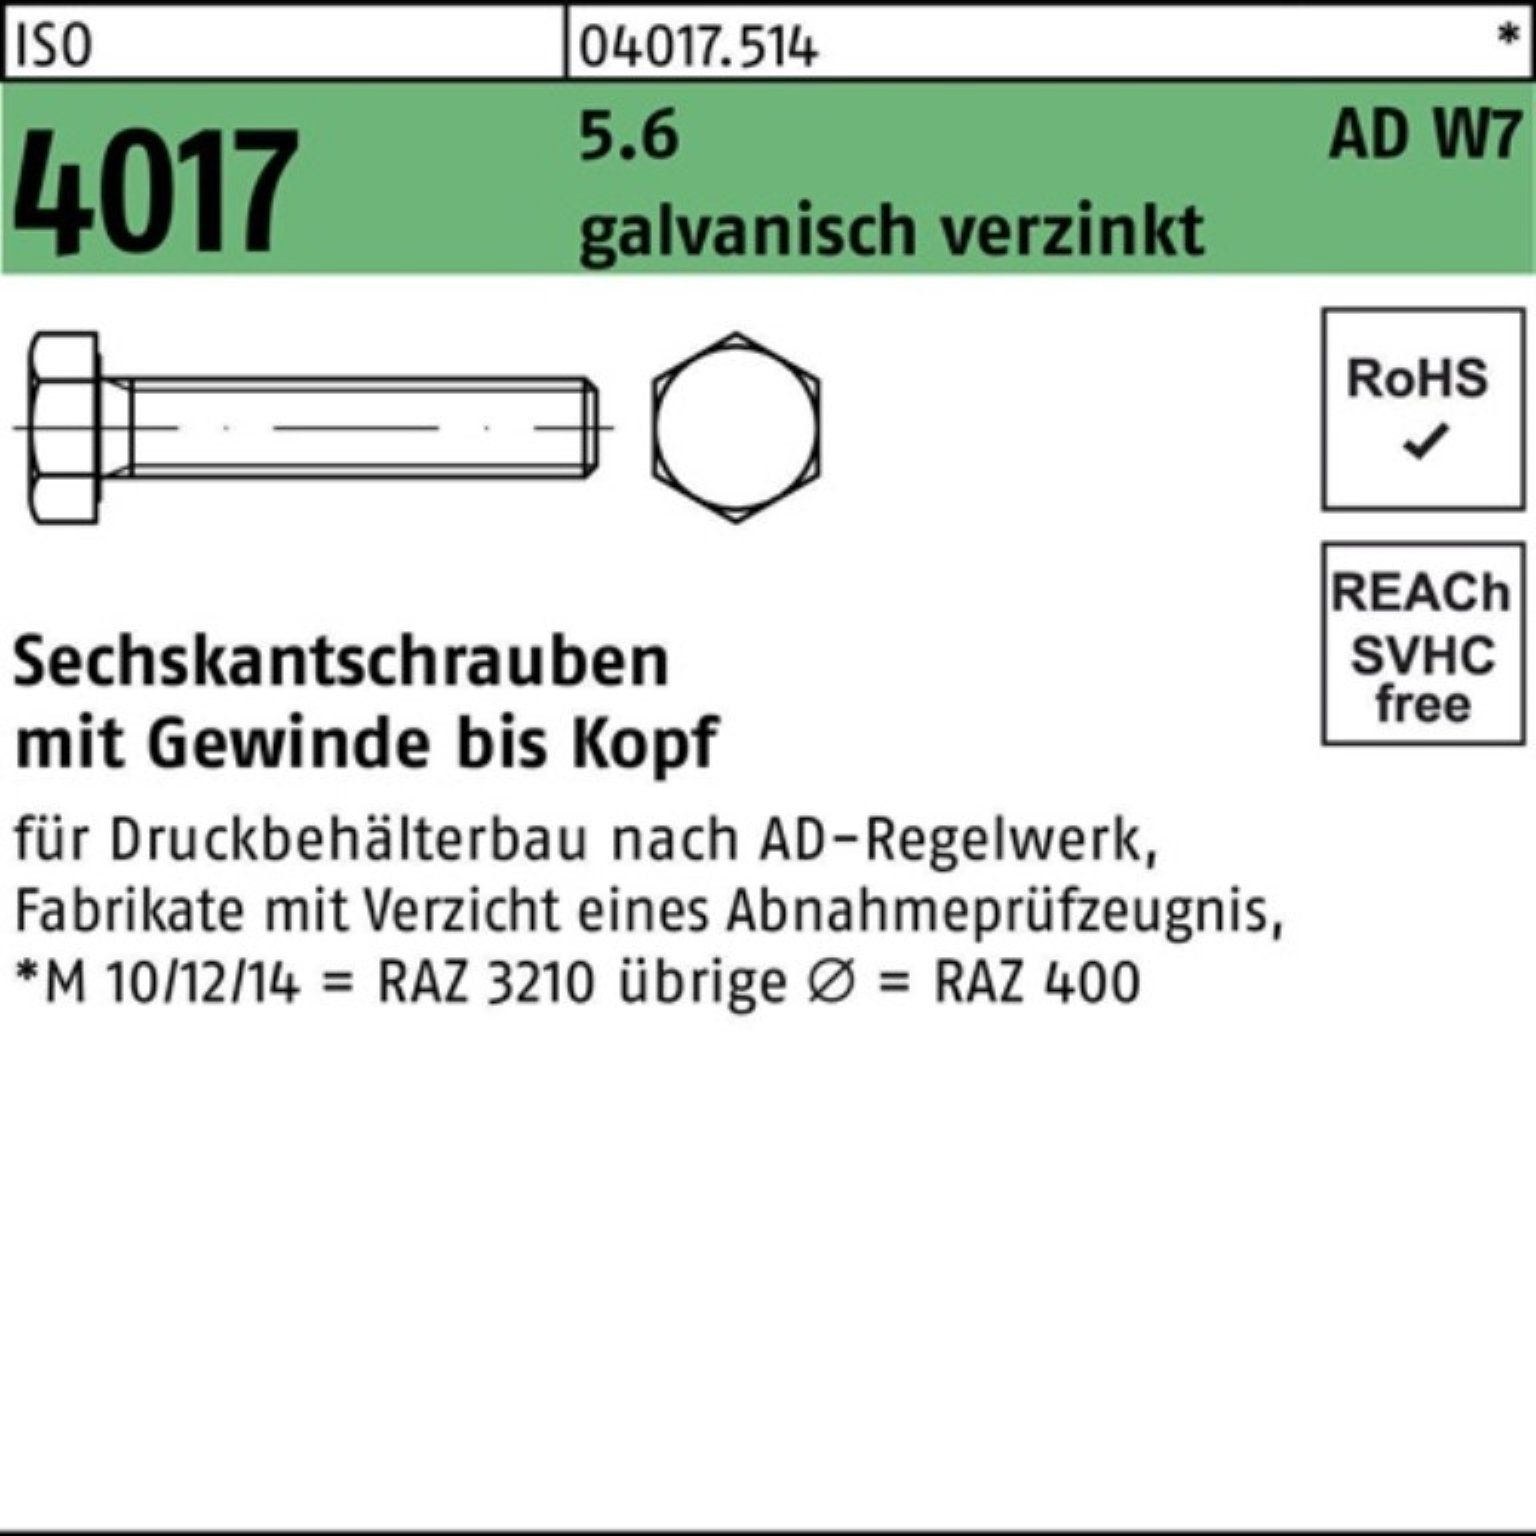 4017 Sechskantschraube 5.6 100er M16x 25 Pack Bufab W7 AD ISO Sechskantschraube galv.verz. VG